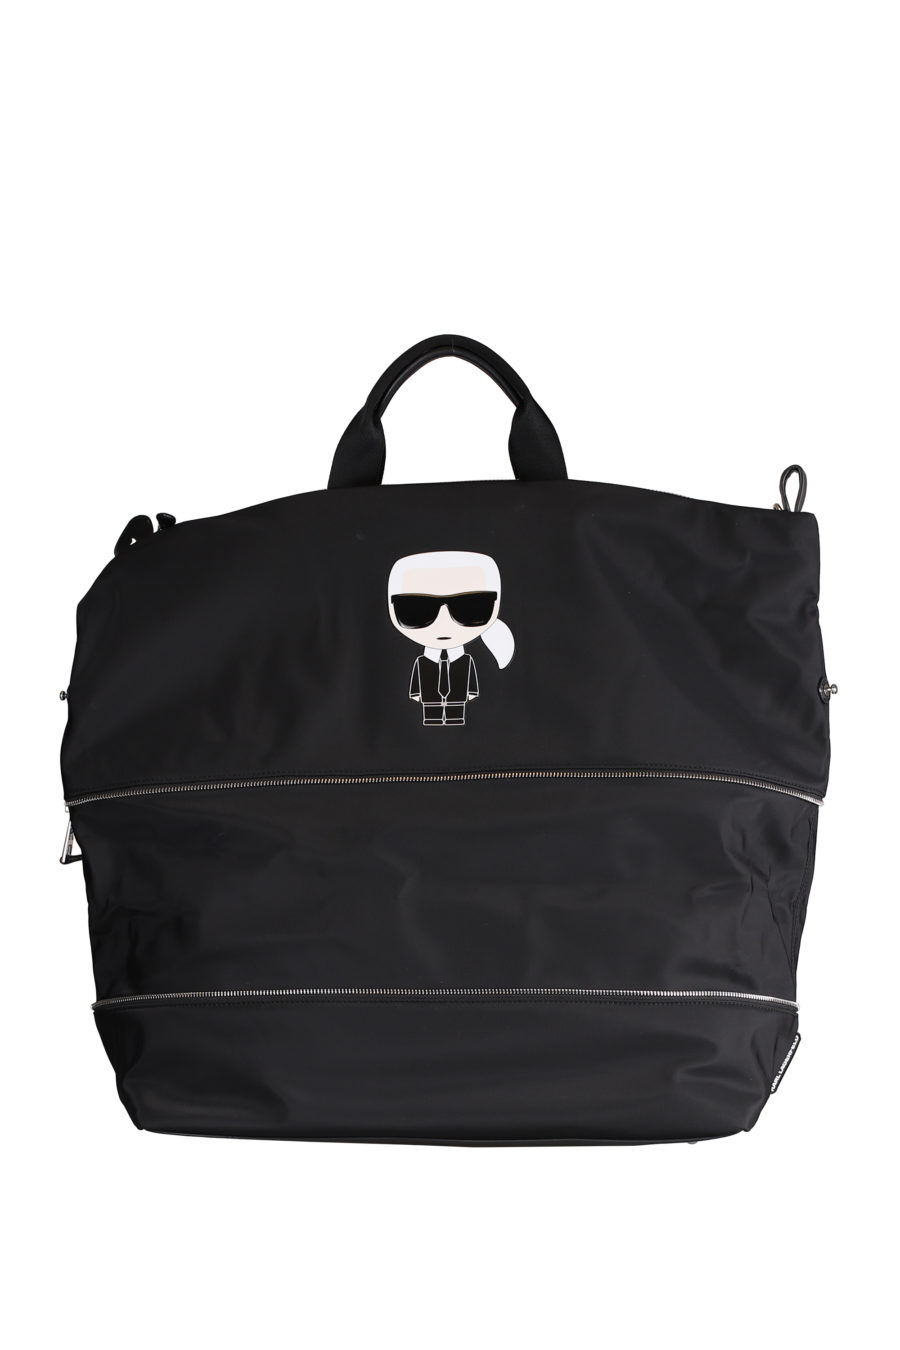 Black travel bag with "Karl" - IMG 9792